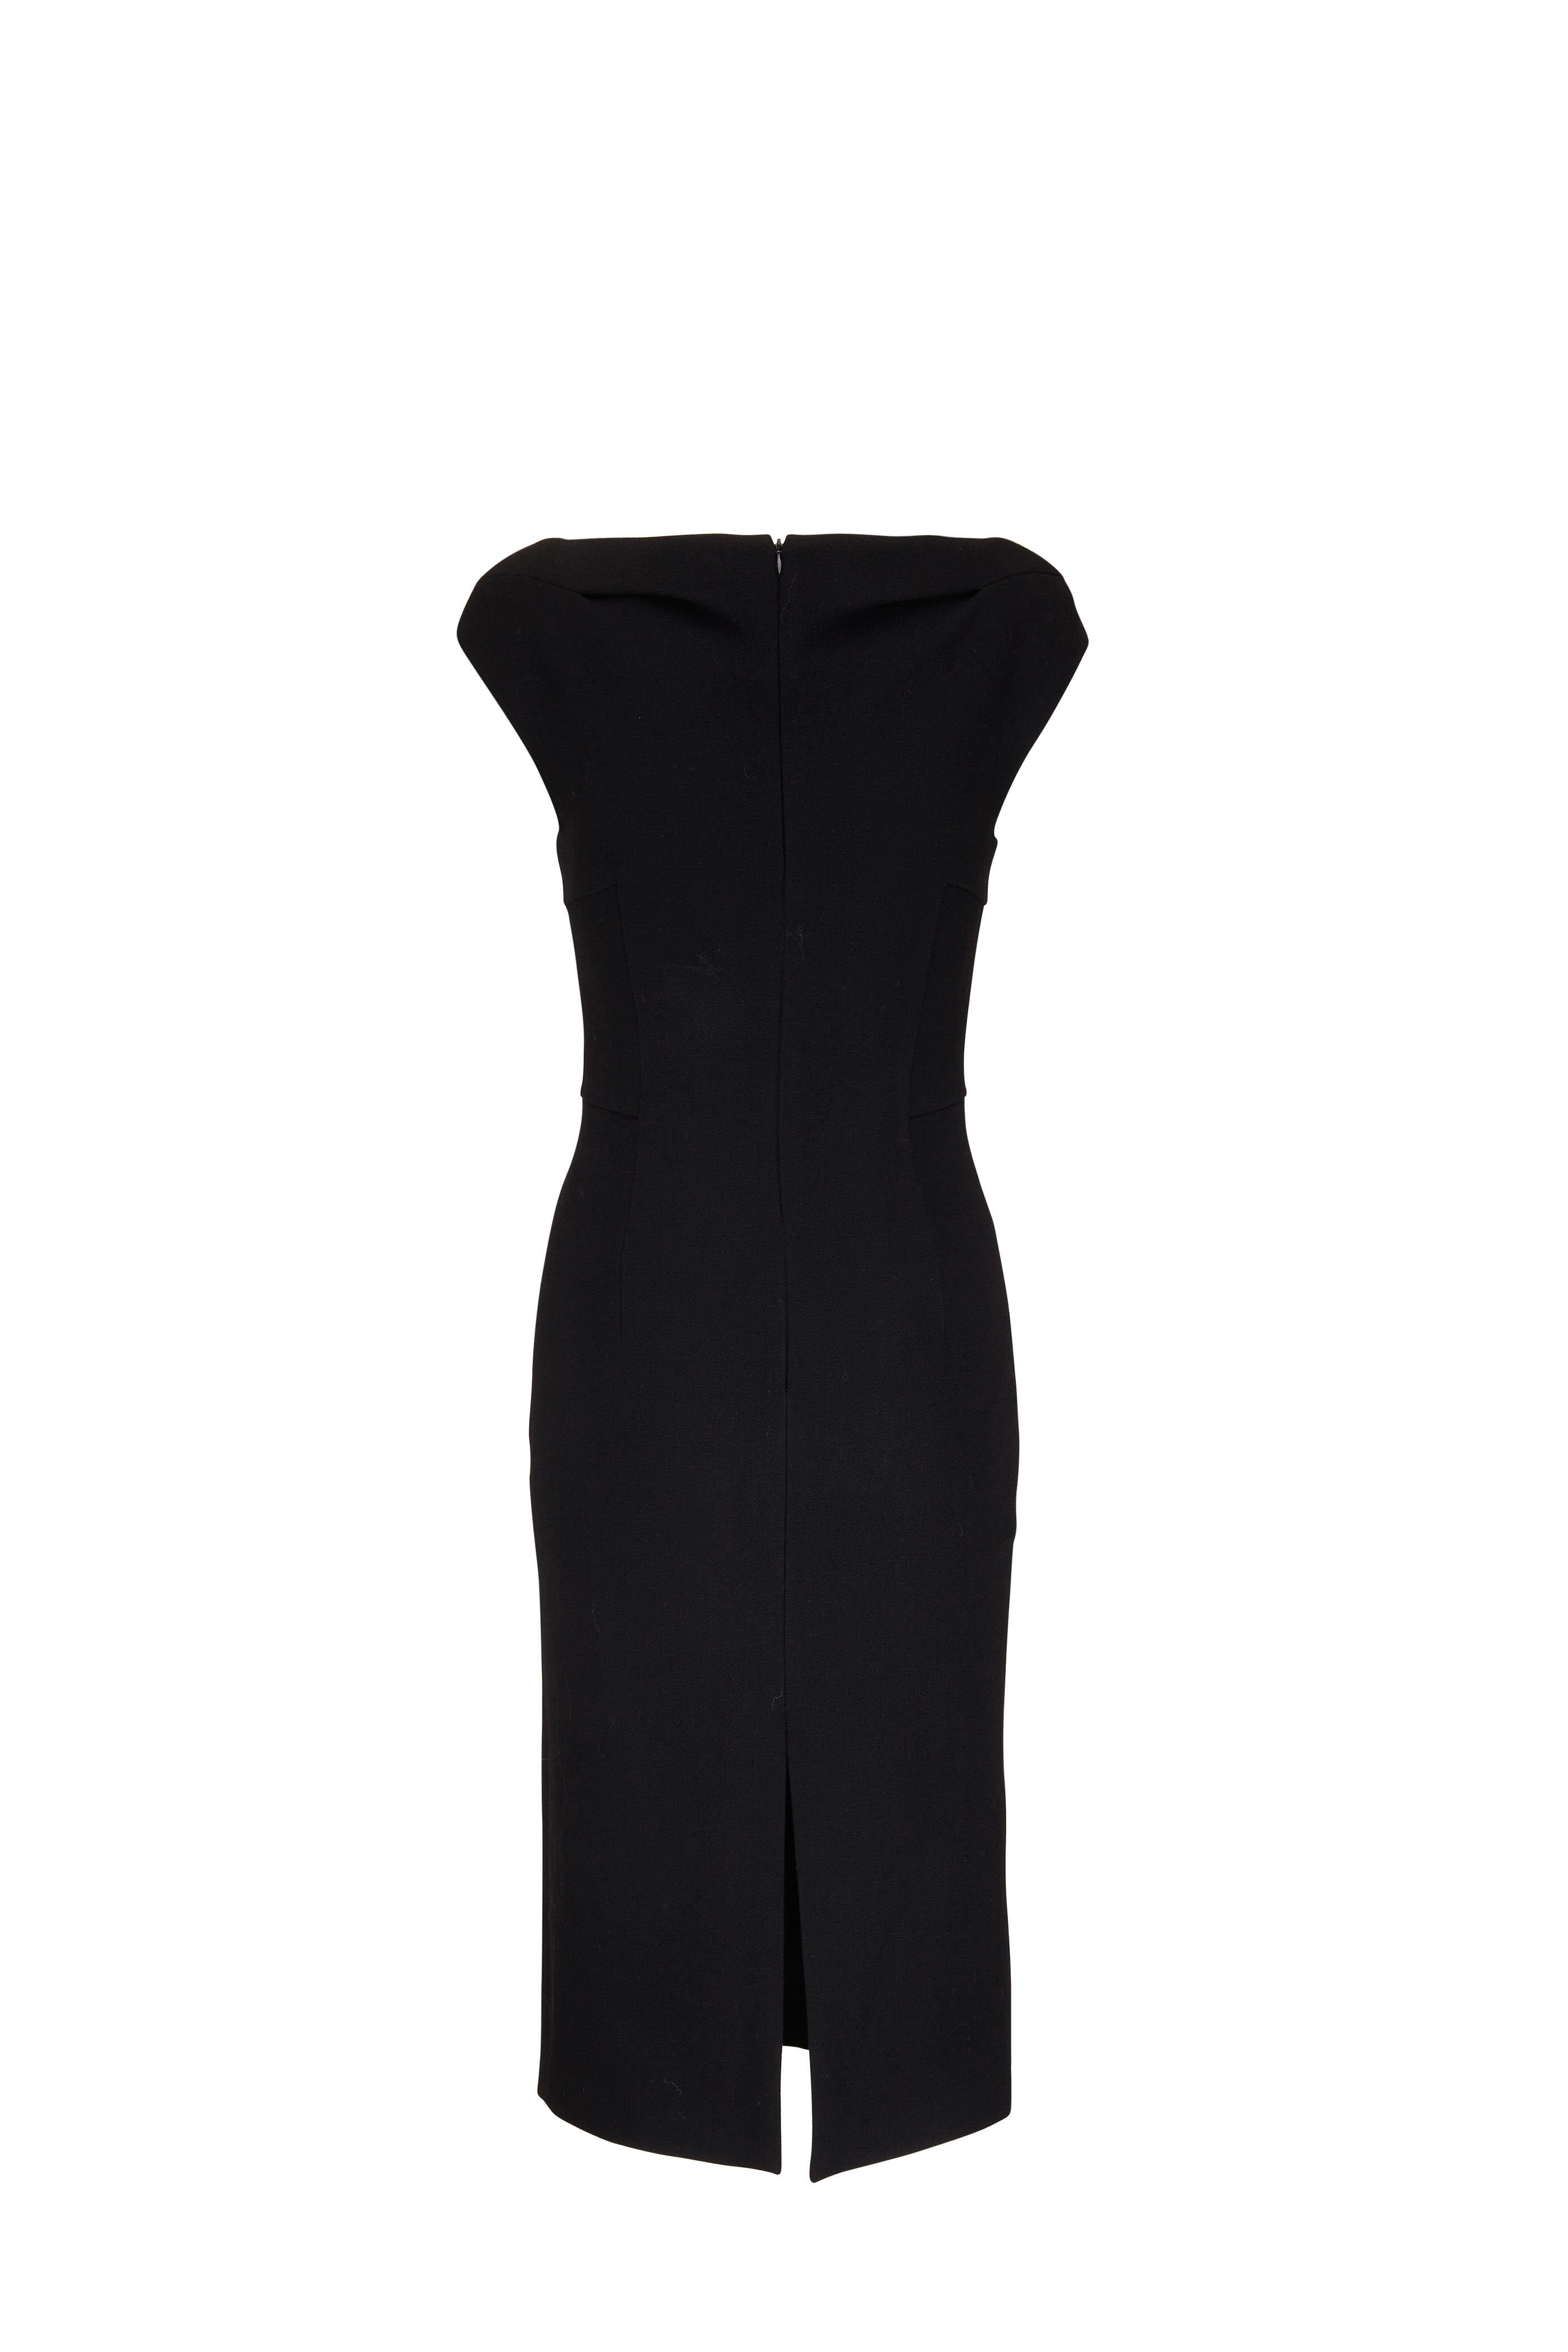 MICHAEL KORS COLLECTION, Black Women's Midi Dress